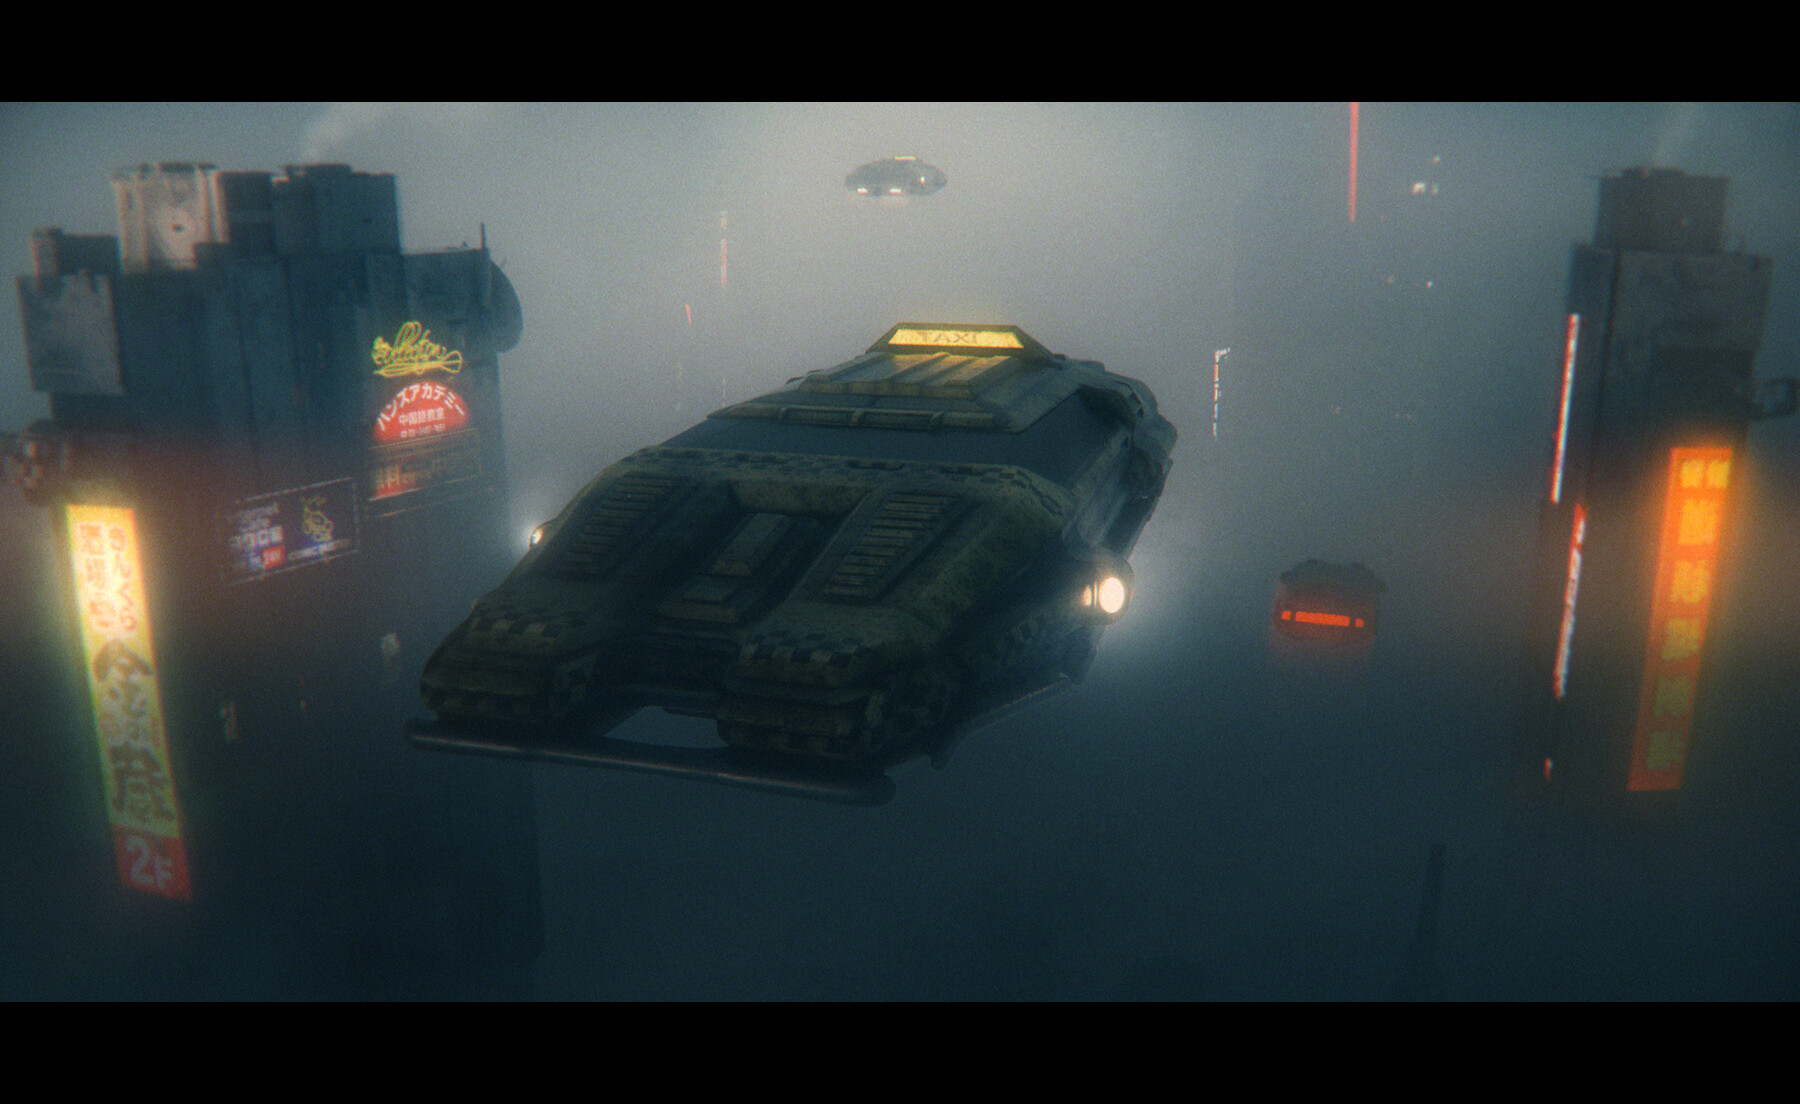 Quentin BOUiLLOUD Artwork Digital Art Flying Car Futuristic Futuristic City Blade Runner Mist Cyber 1800x1104